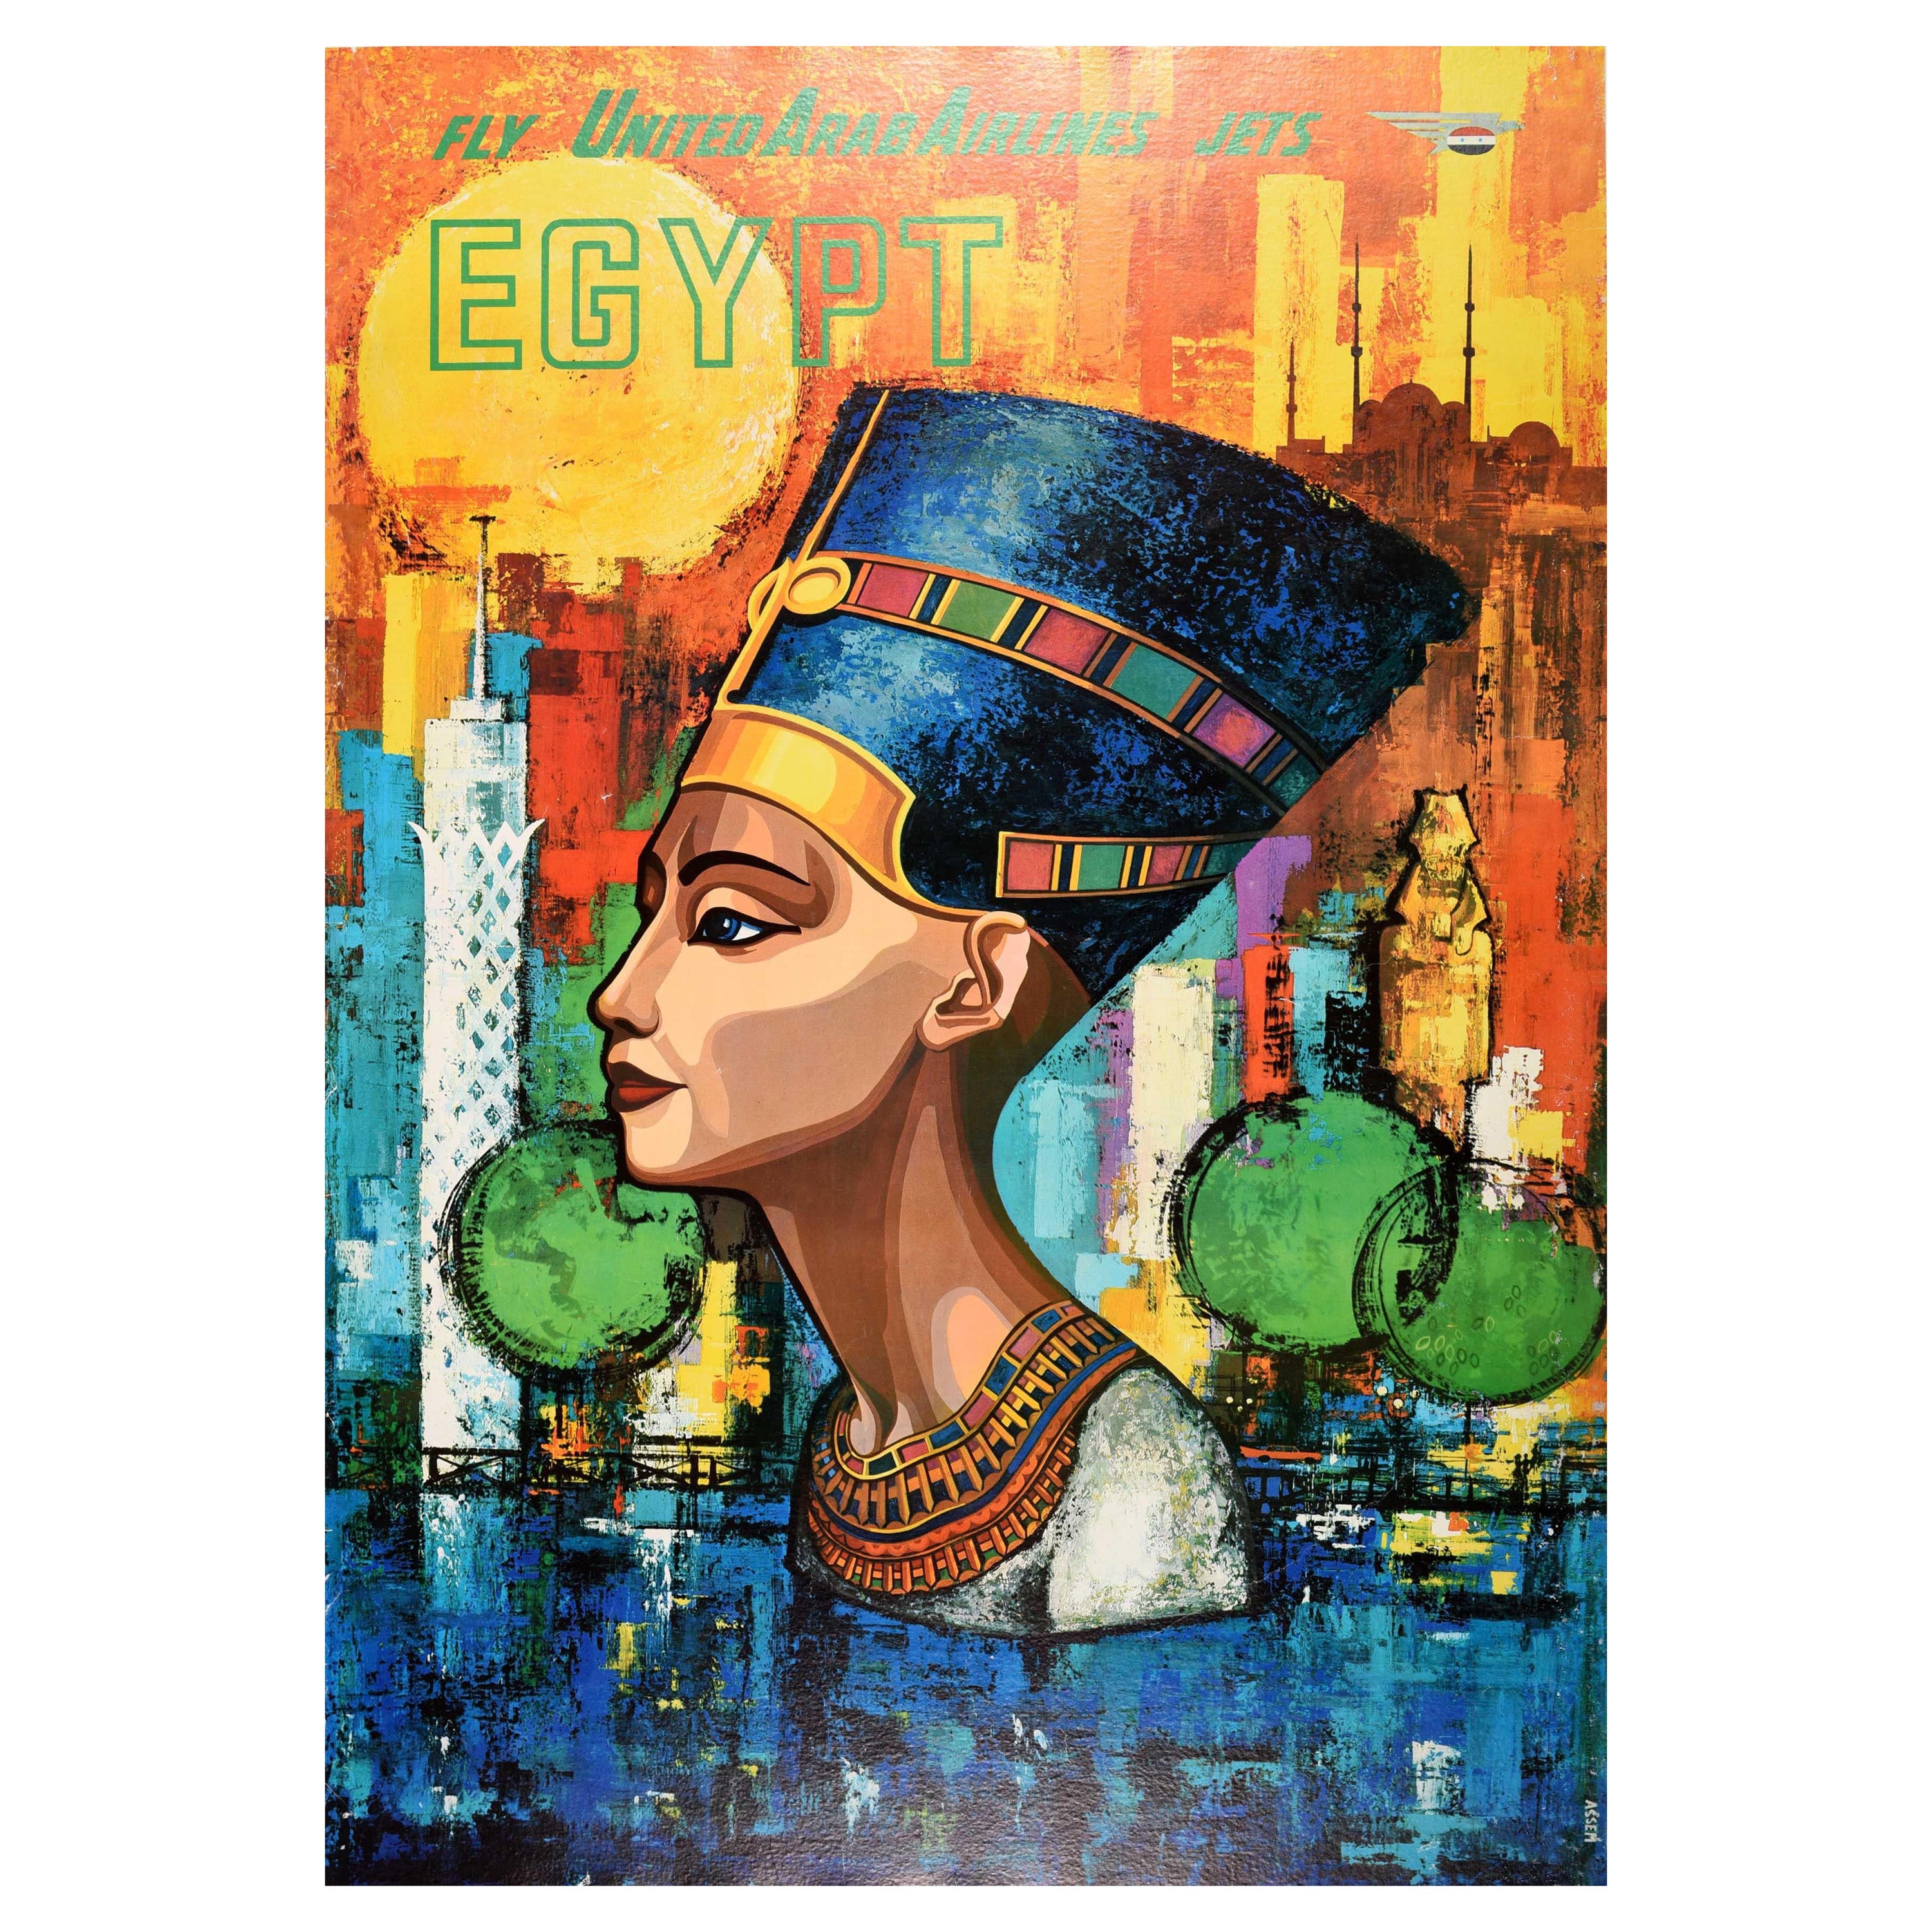 Original Vintage Travel Poster Fly United Arab Airlines Jets Egypt Nefertiti Art